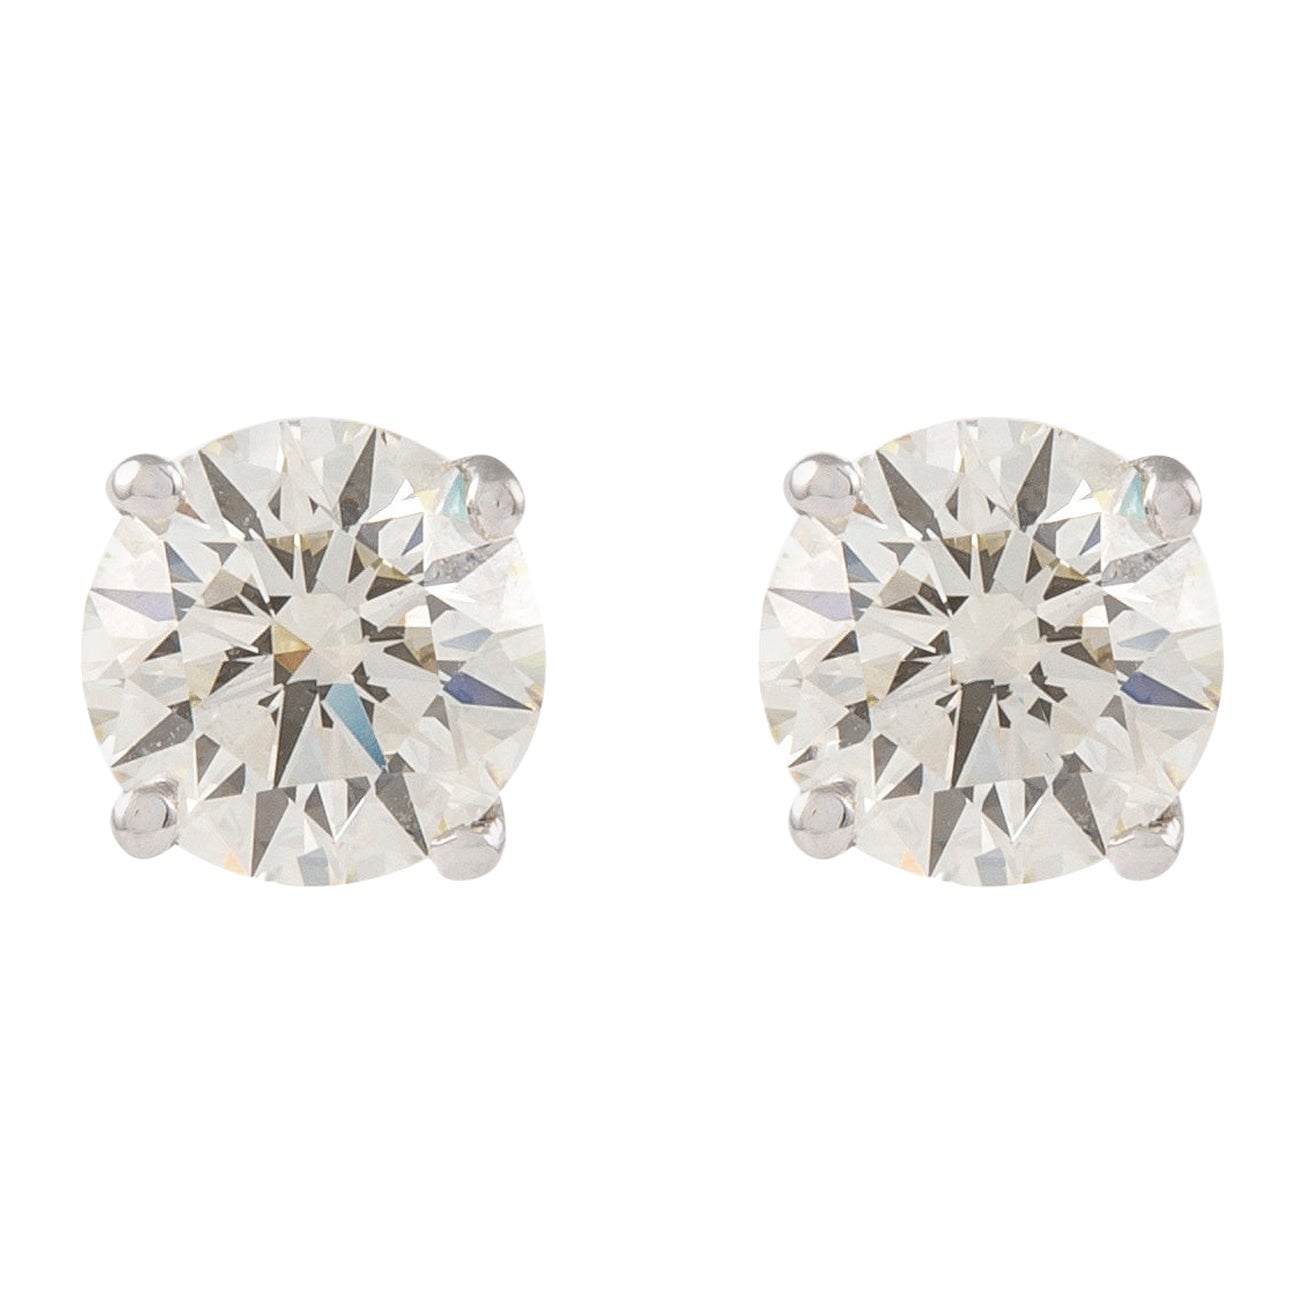 Alexander EGL Certified 1.44 Carat Diamond Stud Earrings White Gold For Sale